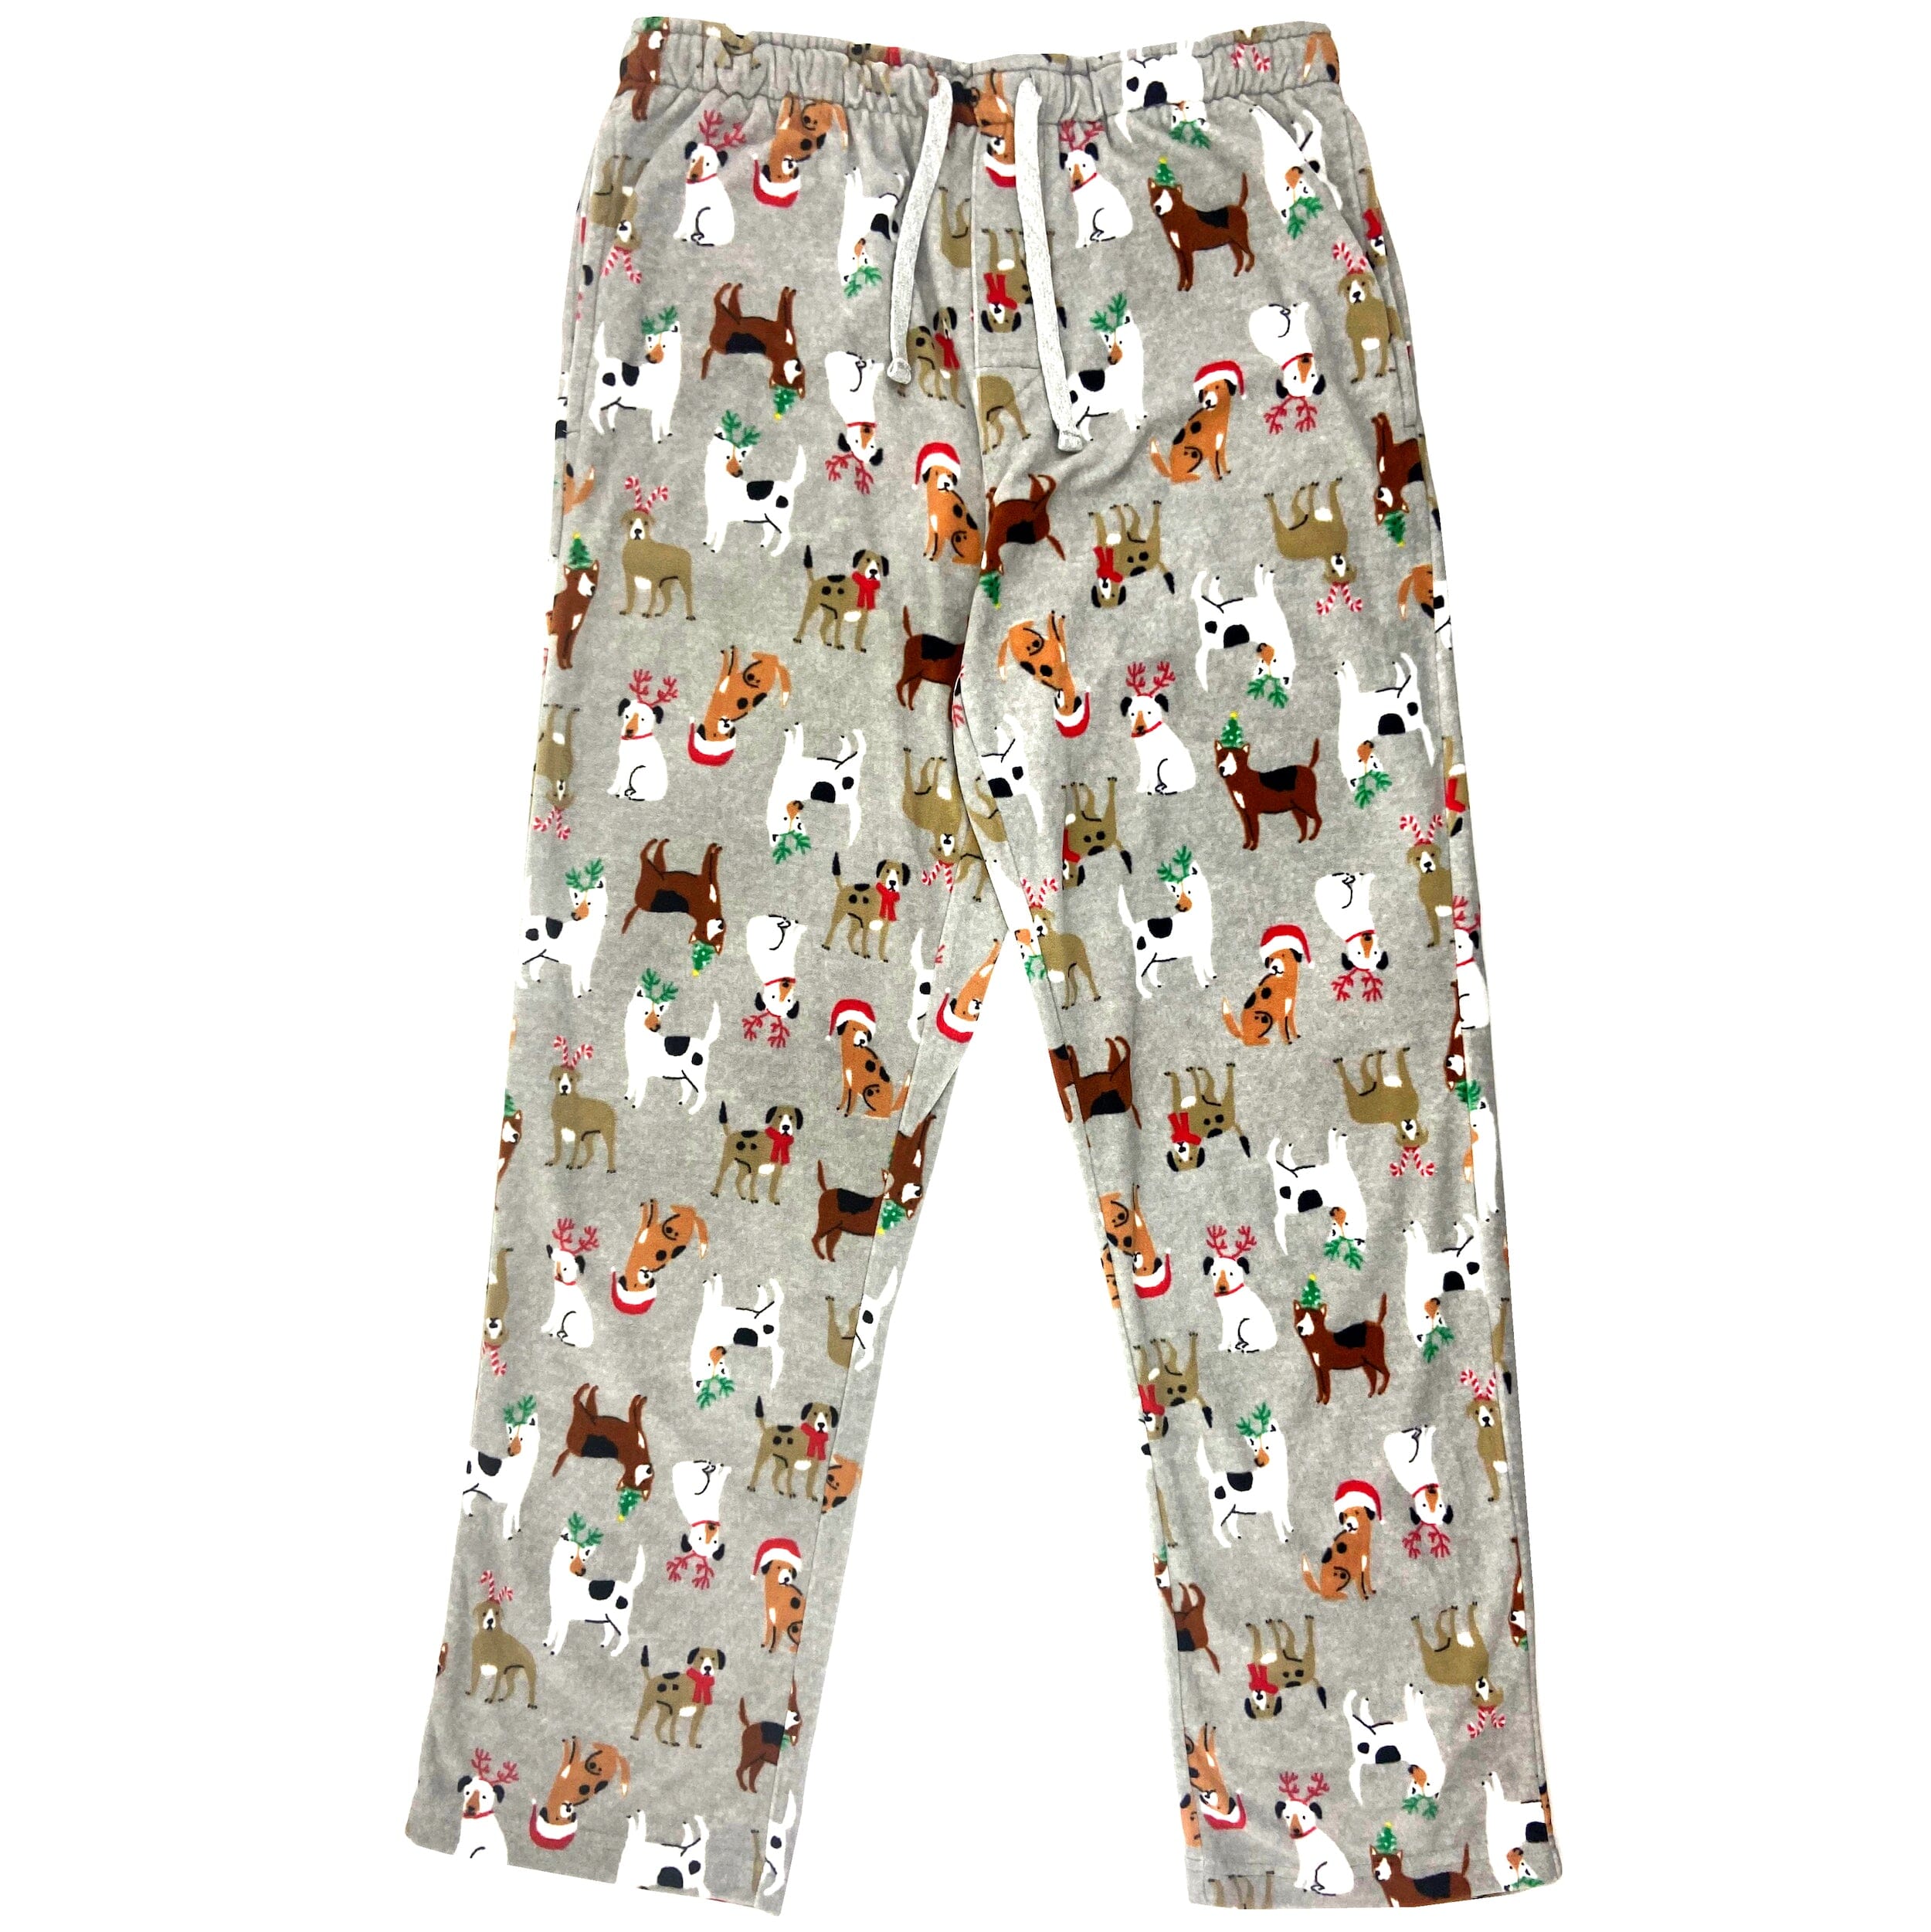 Dog Pajama Pants For Men. Adult Puppy Dog Print Long Sleep Bottoms